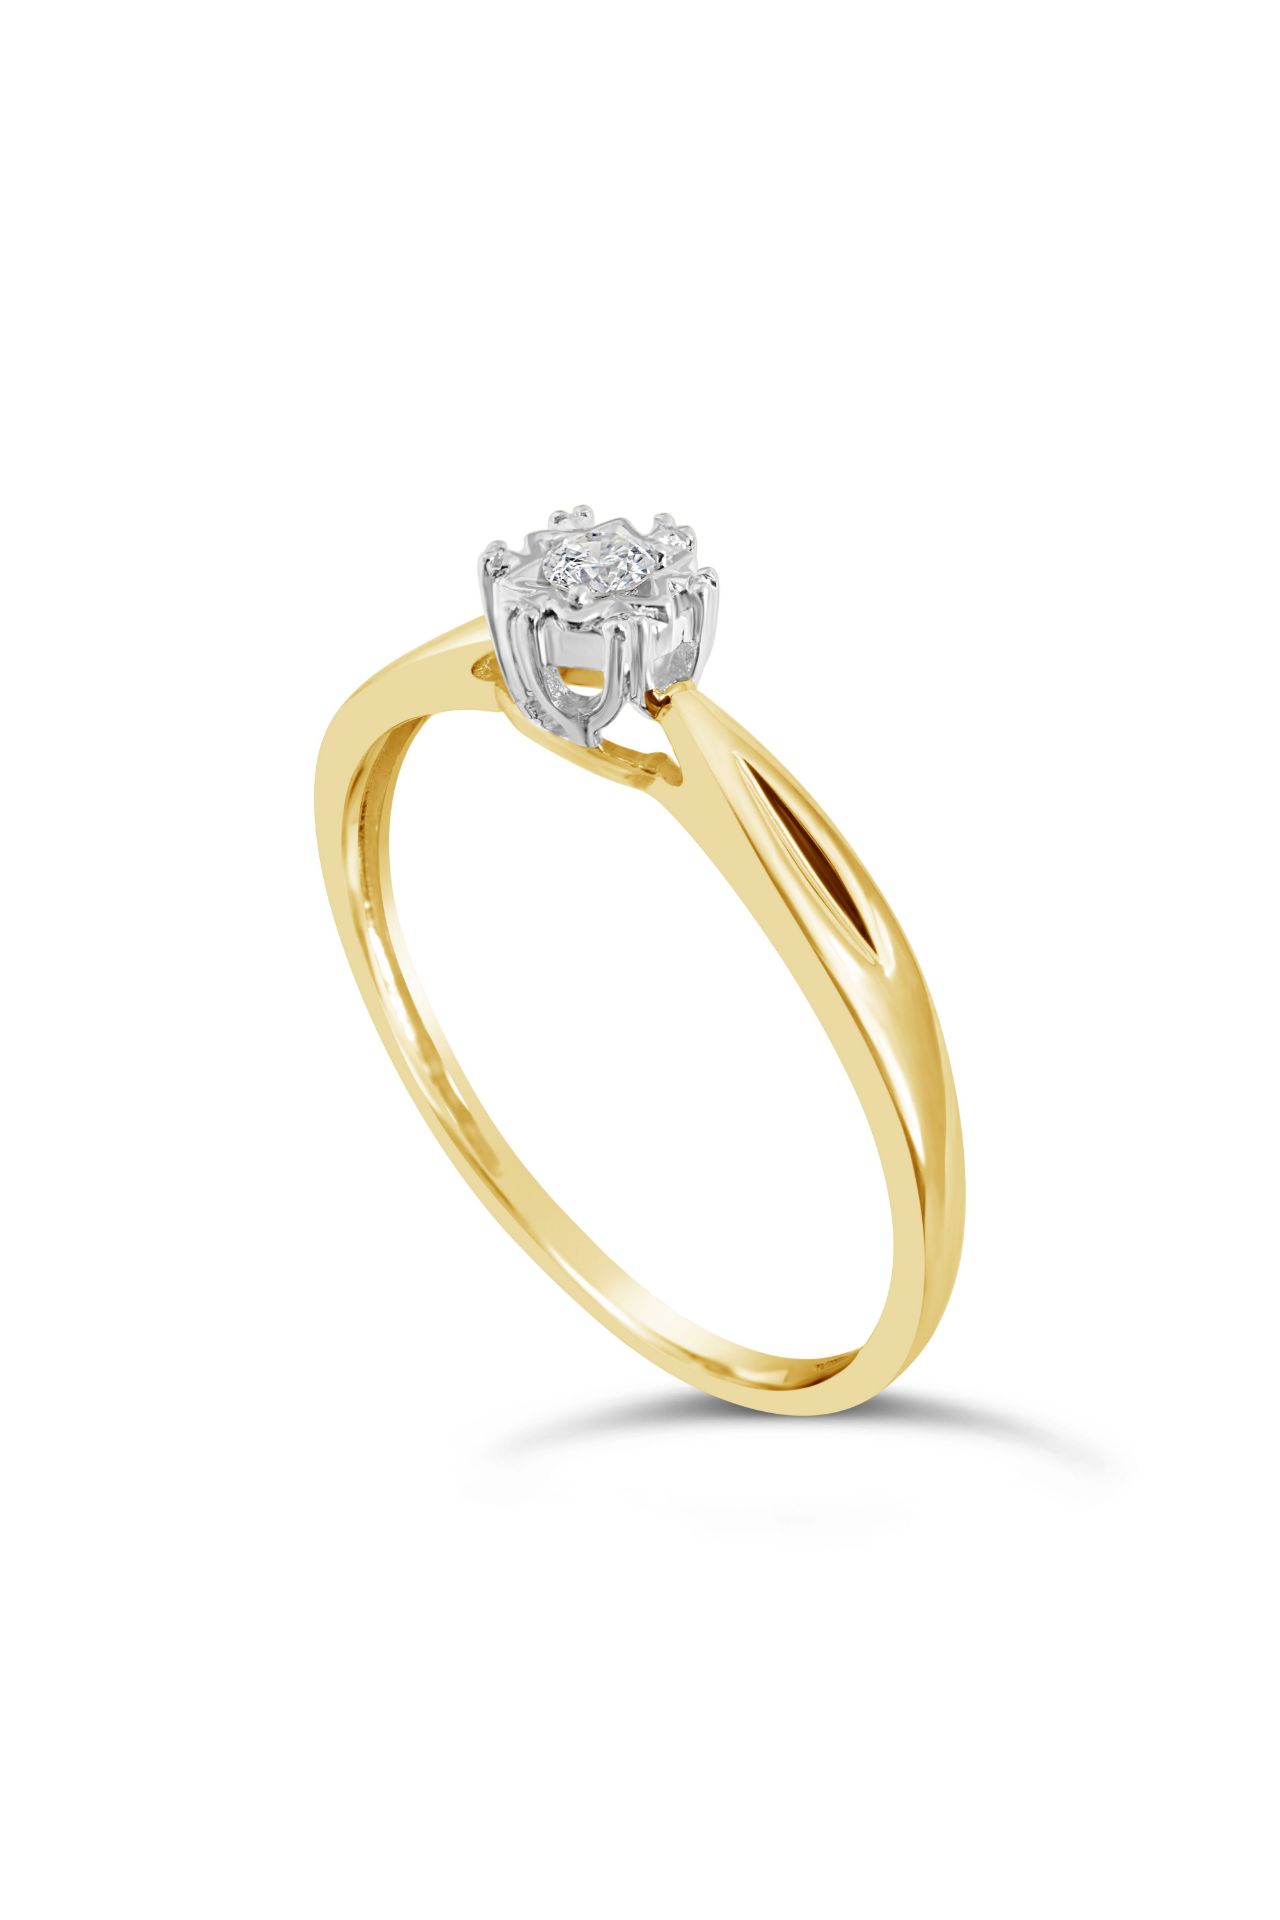 Yellow Gold diamond solitiare ring - Image 2 of 4